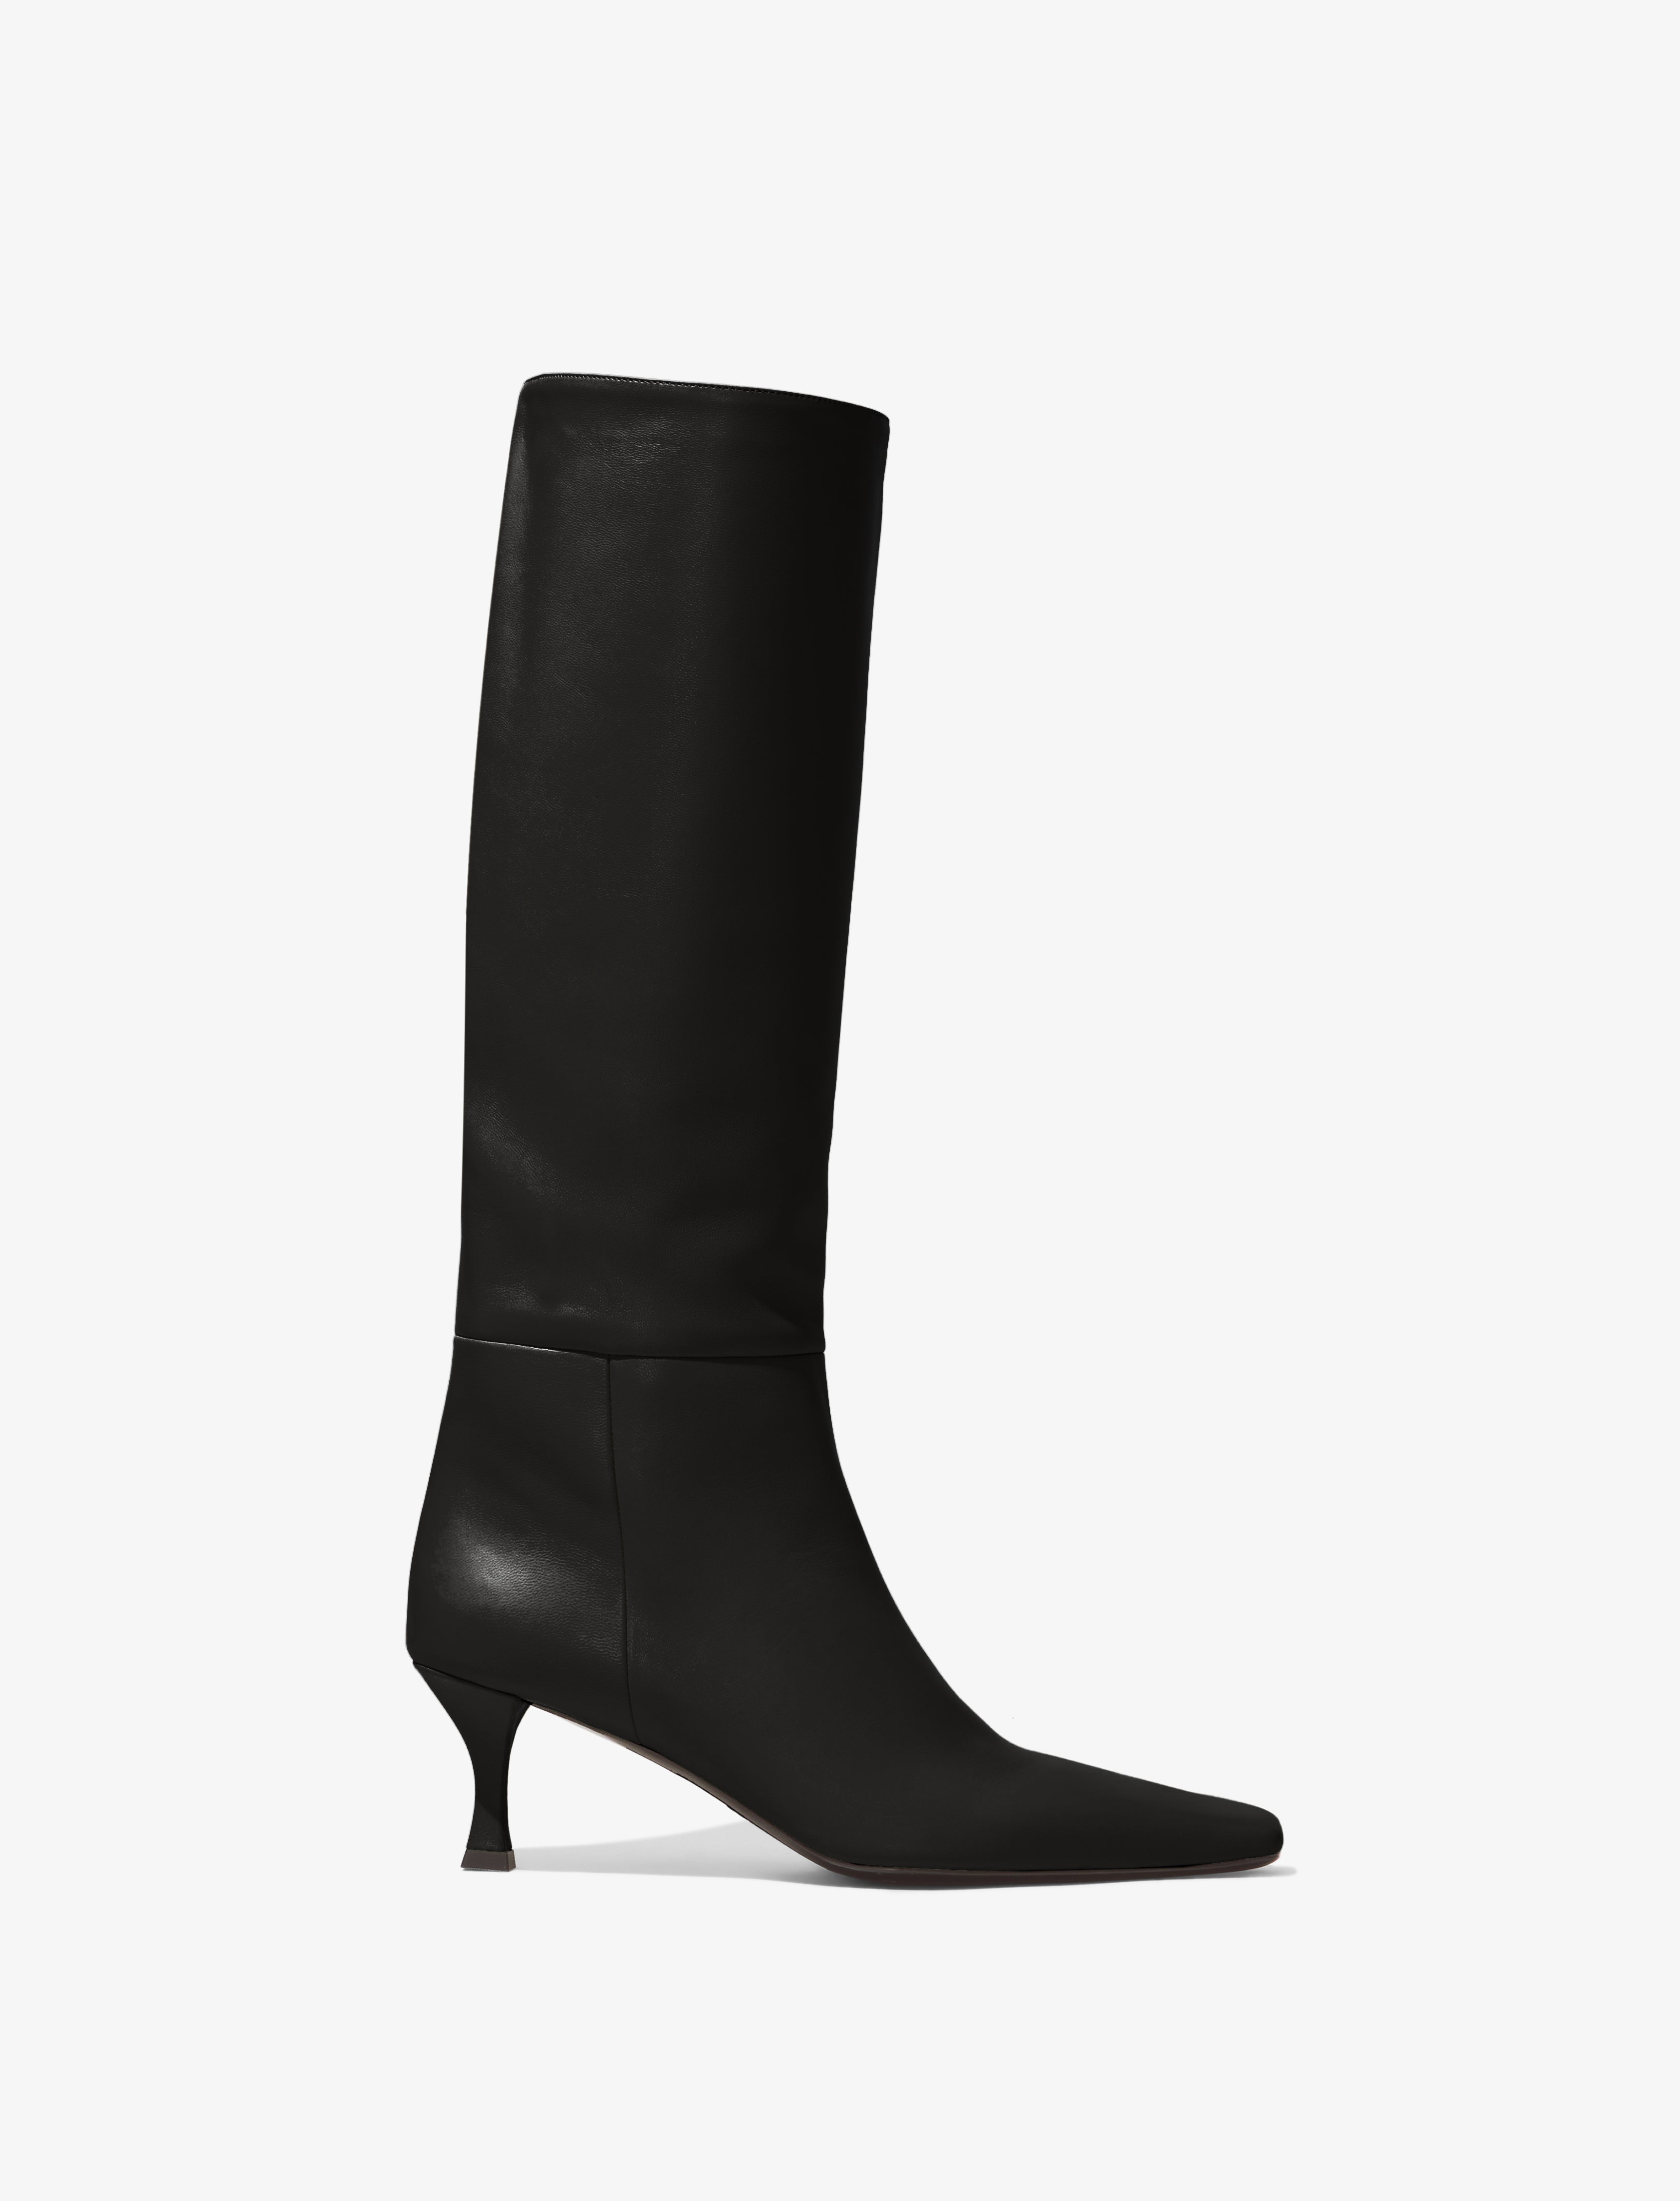 Proenza Schouler Trap Boots - Black | Proenza Schouler